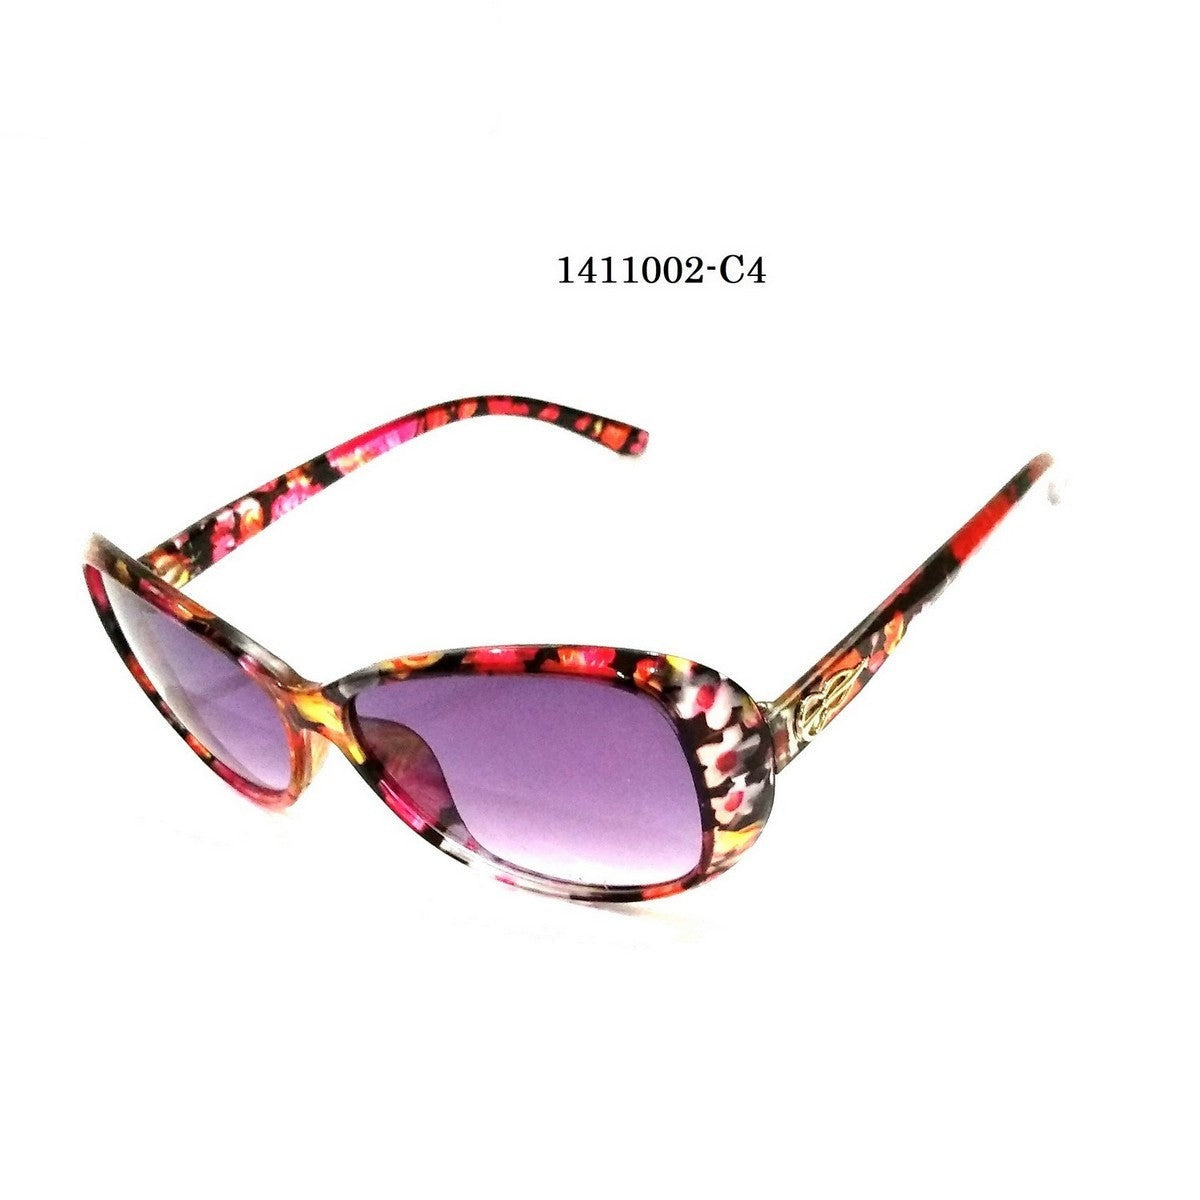 Floral Print Ladies Sunglasses for Women Model 1141002C4 - Glasses India Online